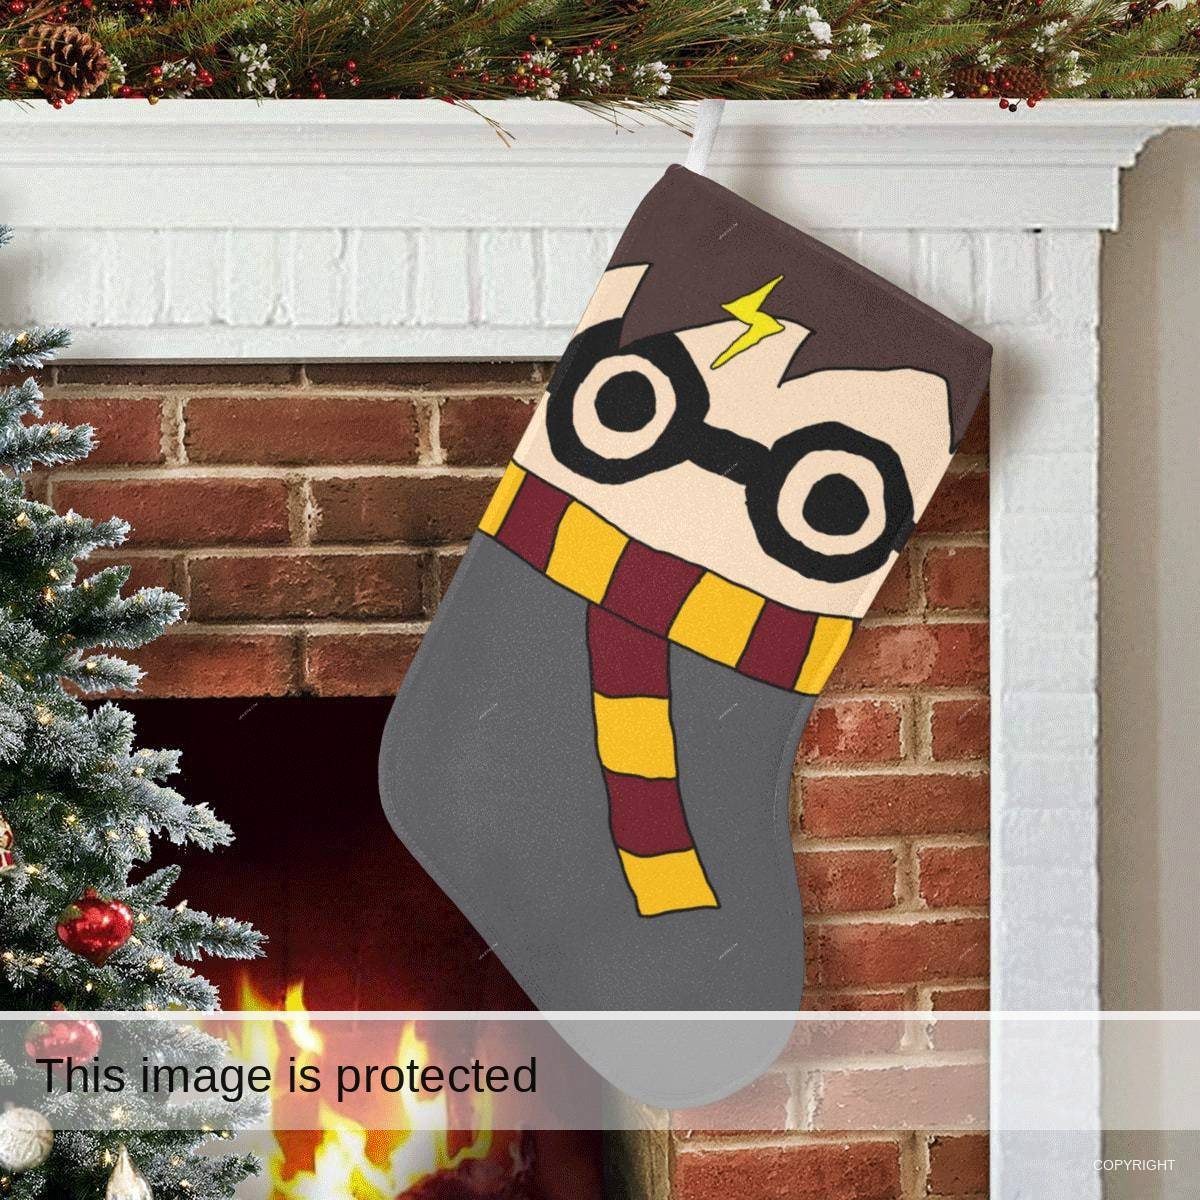 Harry Potter Christmas Stocking